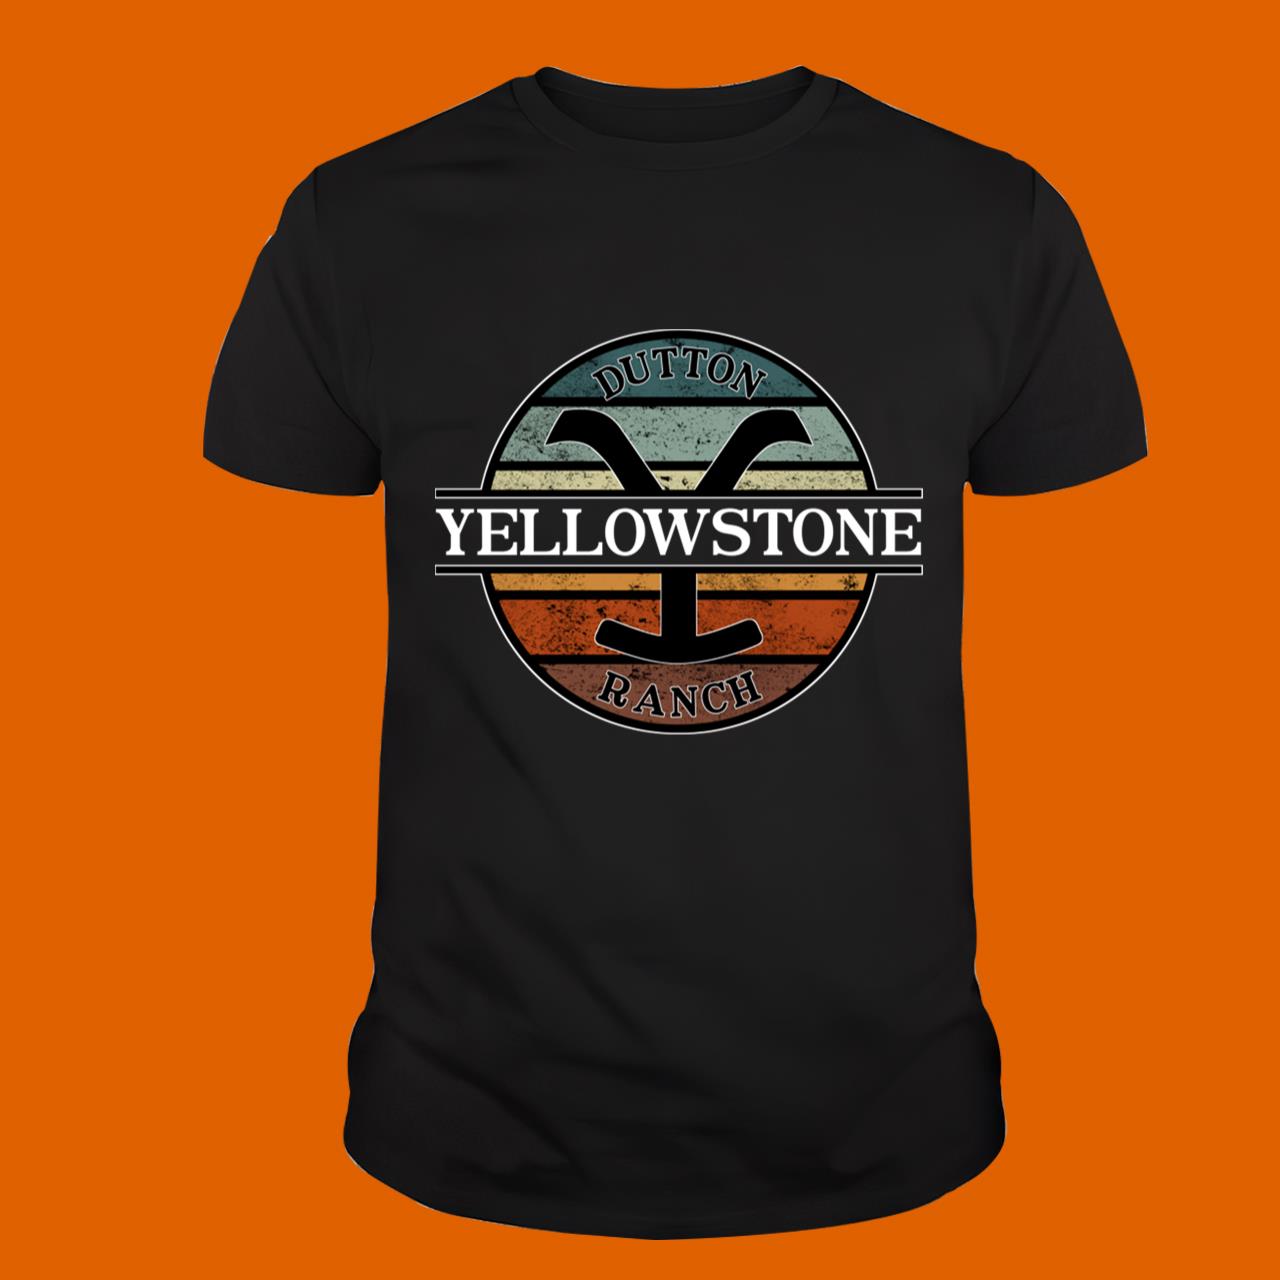 Yellowstone Dutton Ranch Vintage T-Shirt